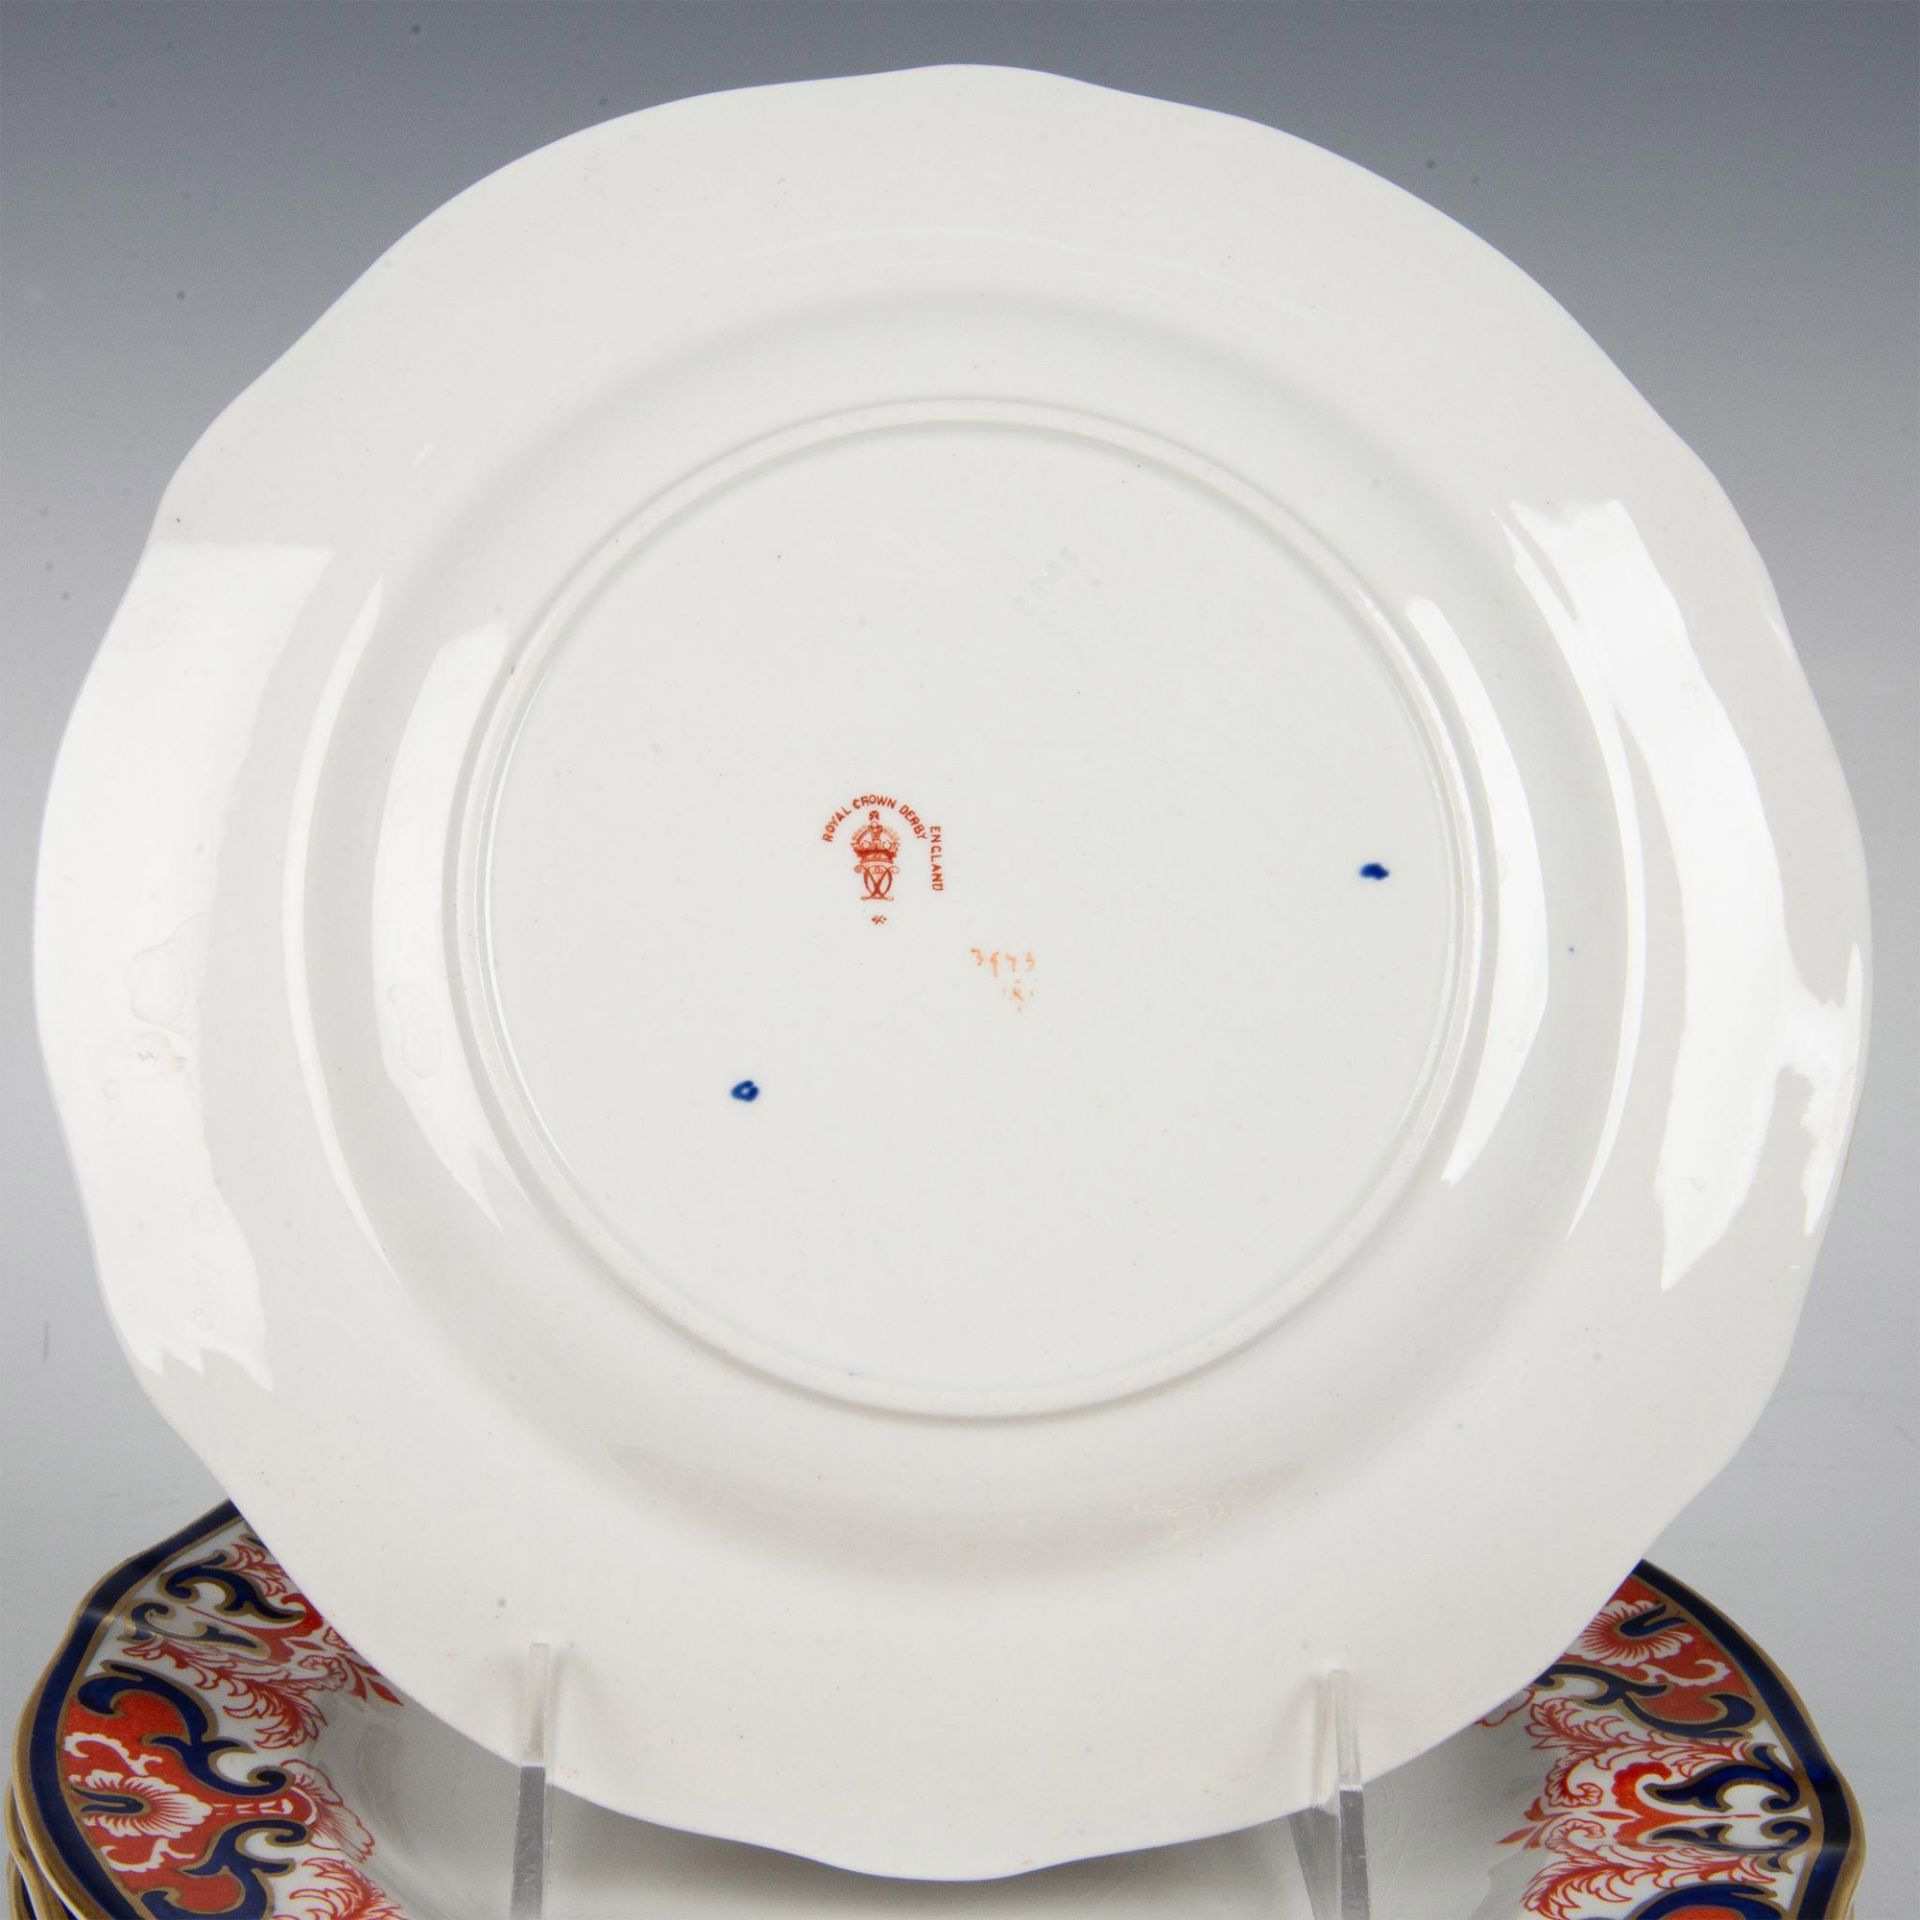 25pc Royal Crown Derby Porcelain Dinner Ware, Imari - Image 8 of 14